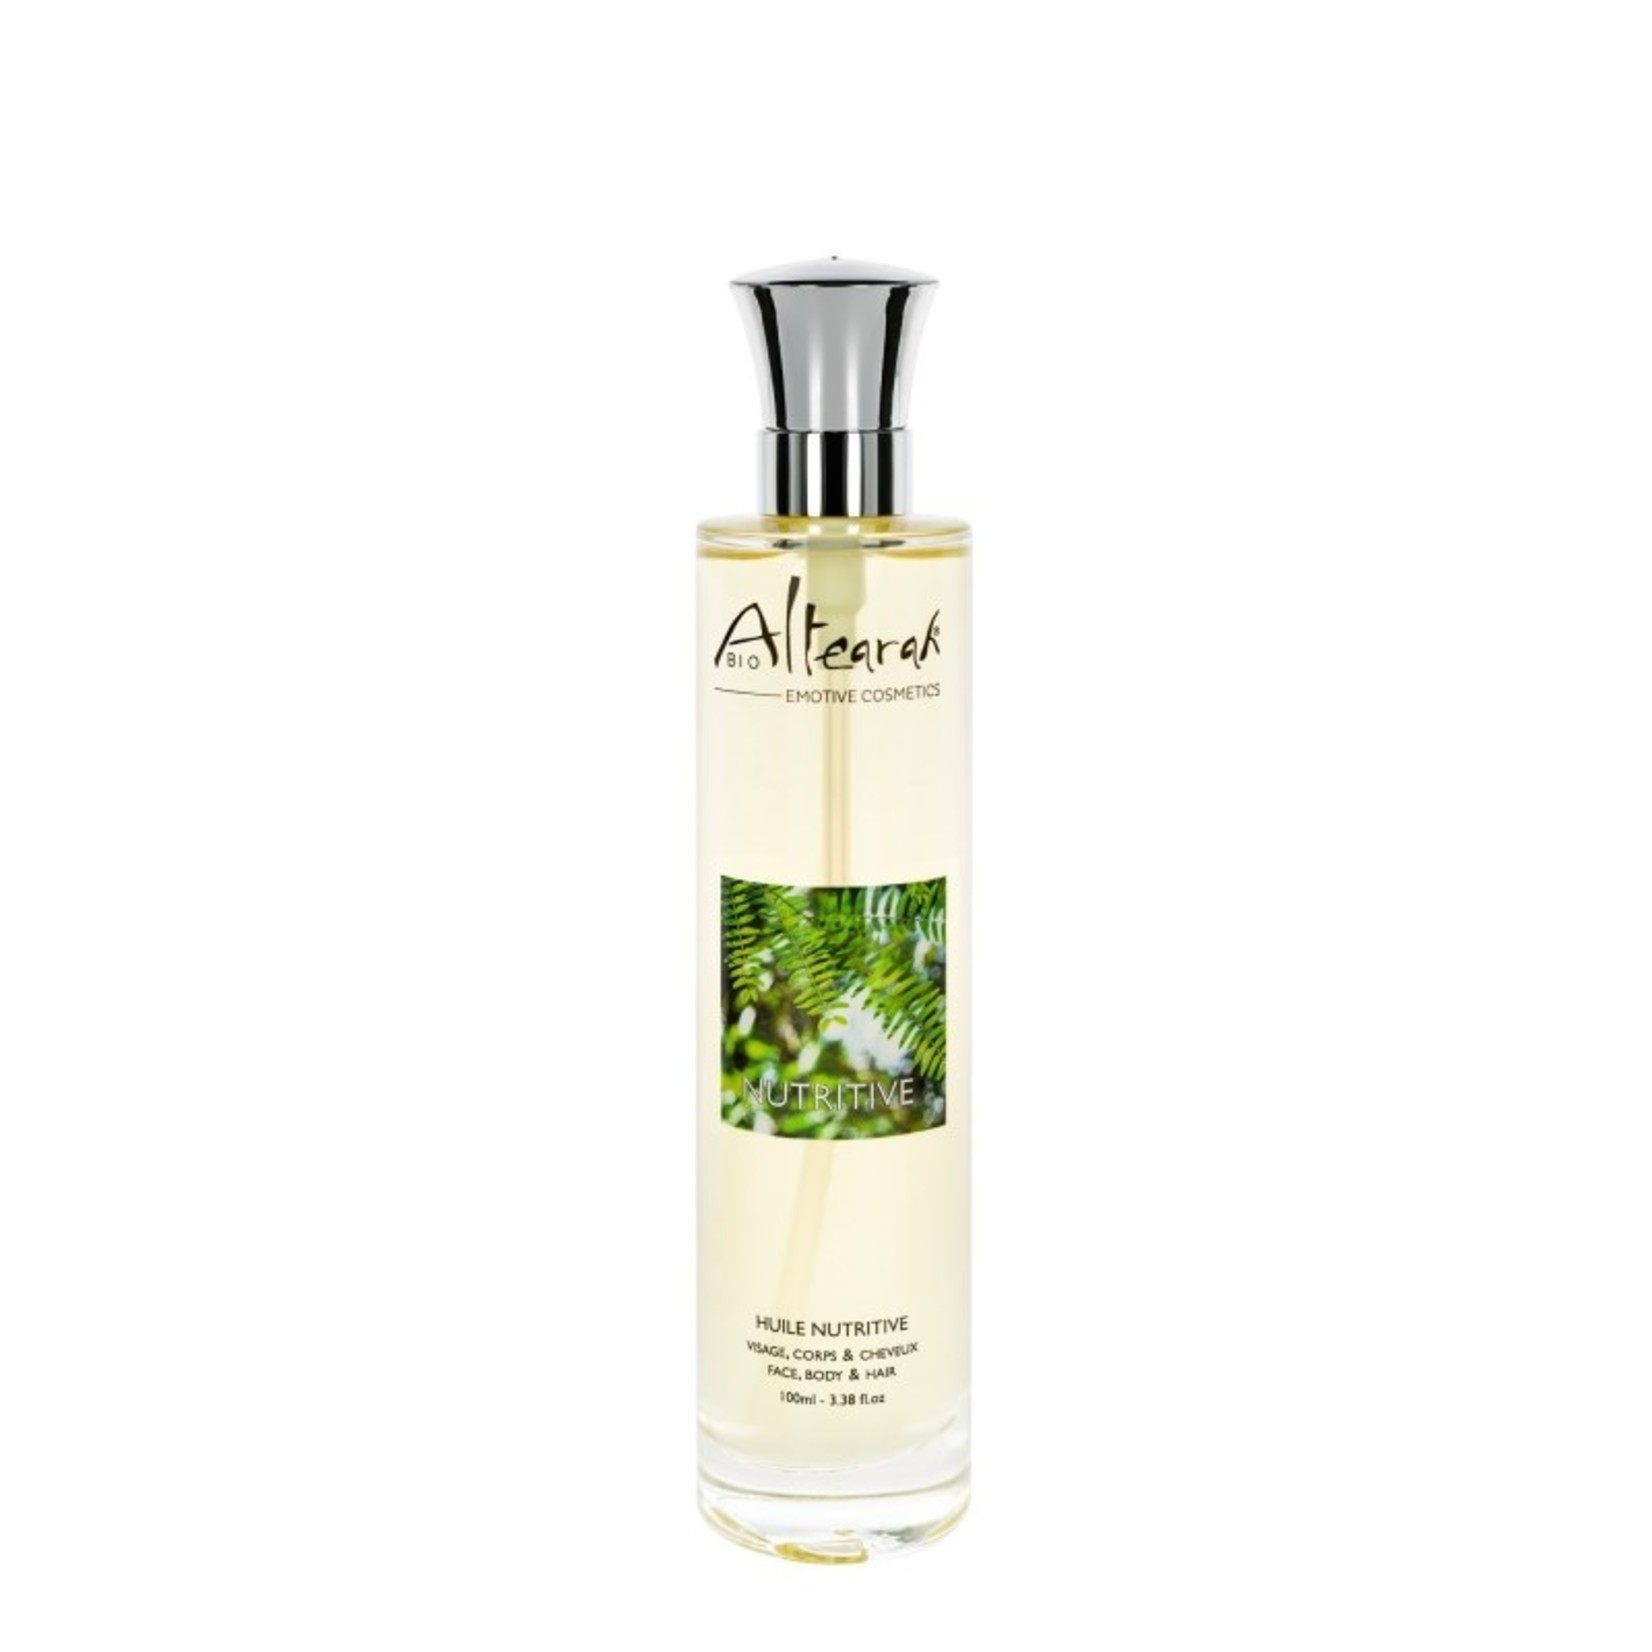 Altearah Skin Care Oil - (Nutritive) without essential oils